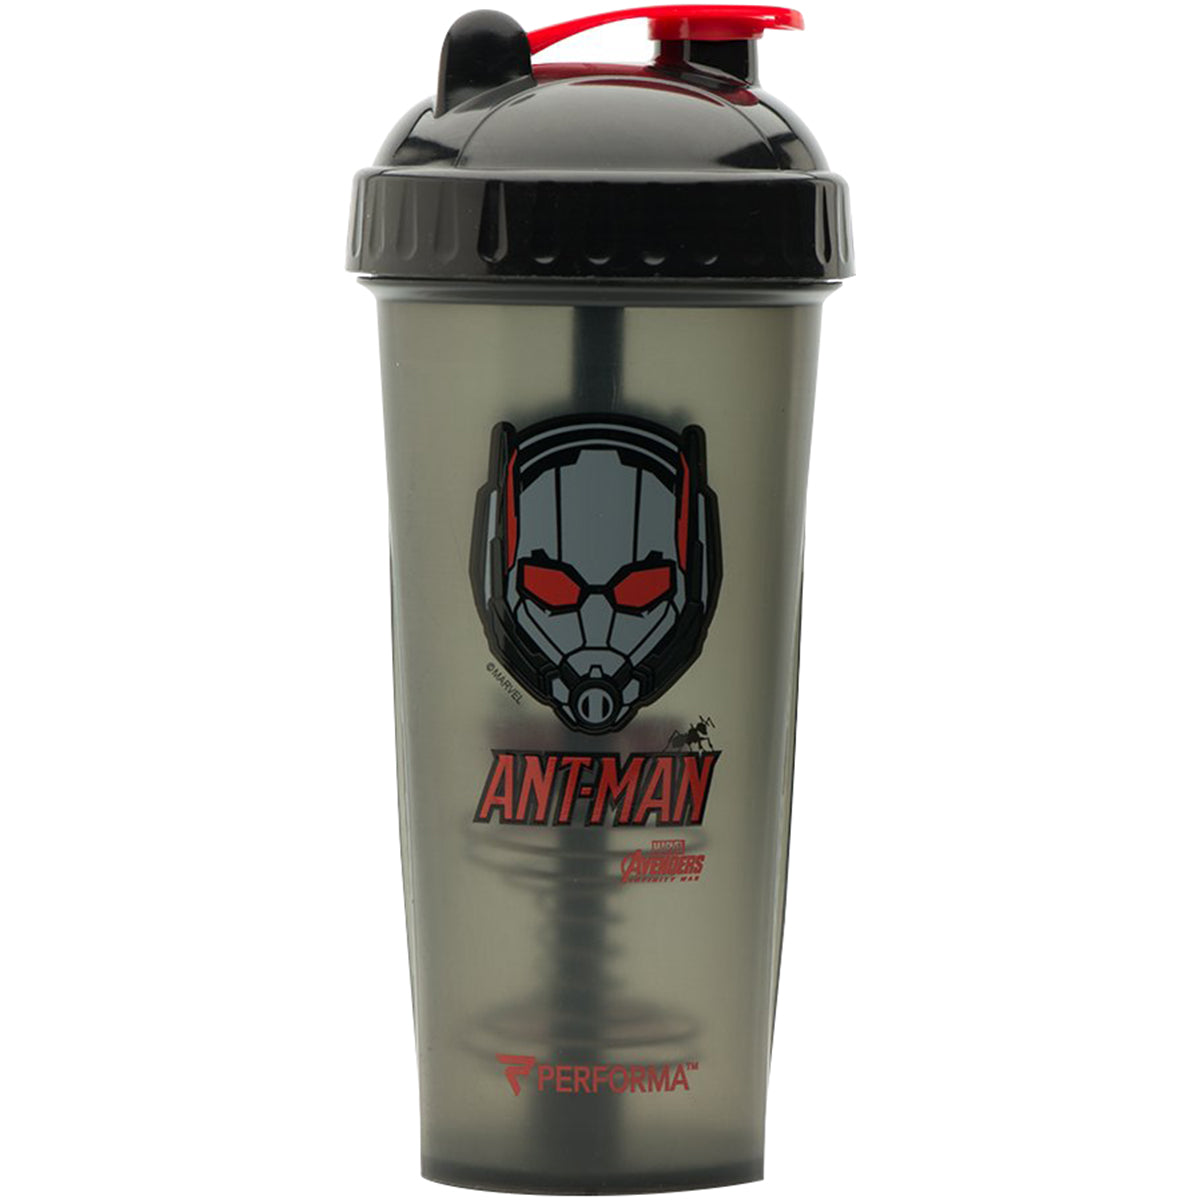 Performa PerfectShaker Avengers Infinity War Shaker Cup Bottle - Ant-Man PerfectShaker